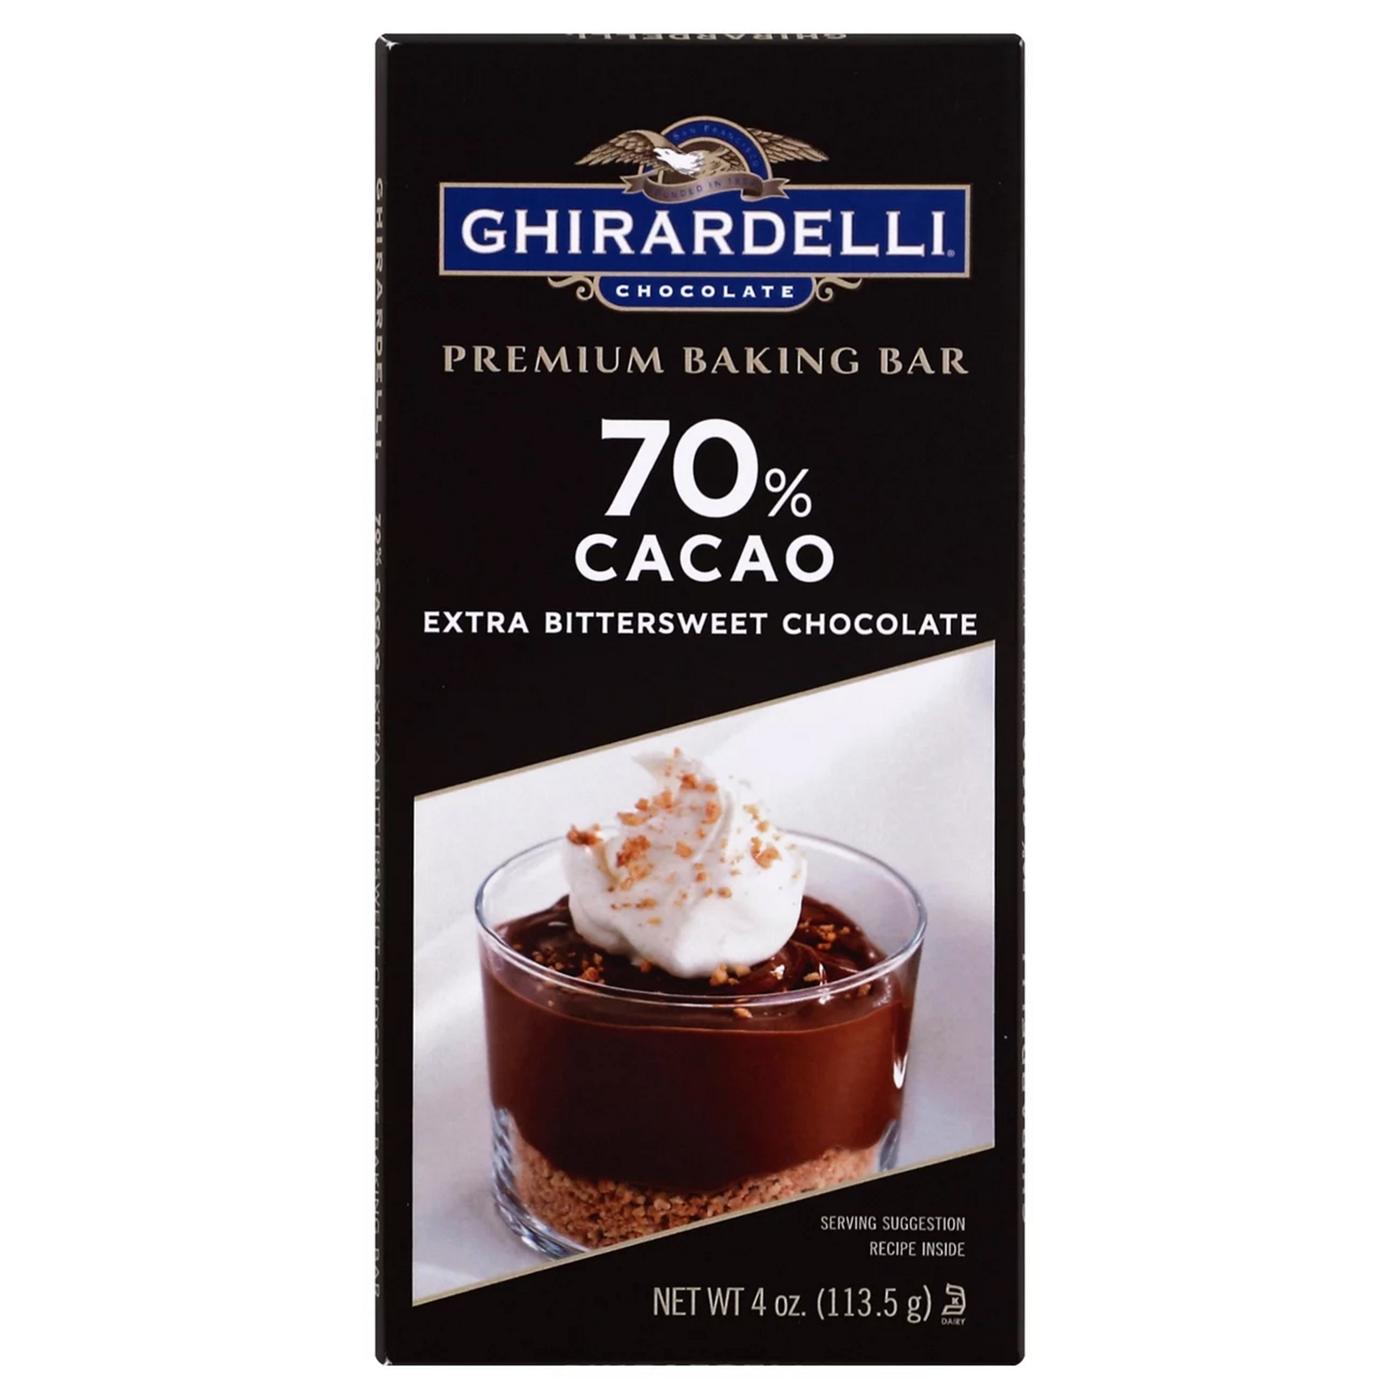 Ghirardelli 70% Cacao Extra Bittersweet Chocolate Premium Baking Bar; image 1 of 2